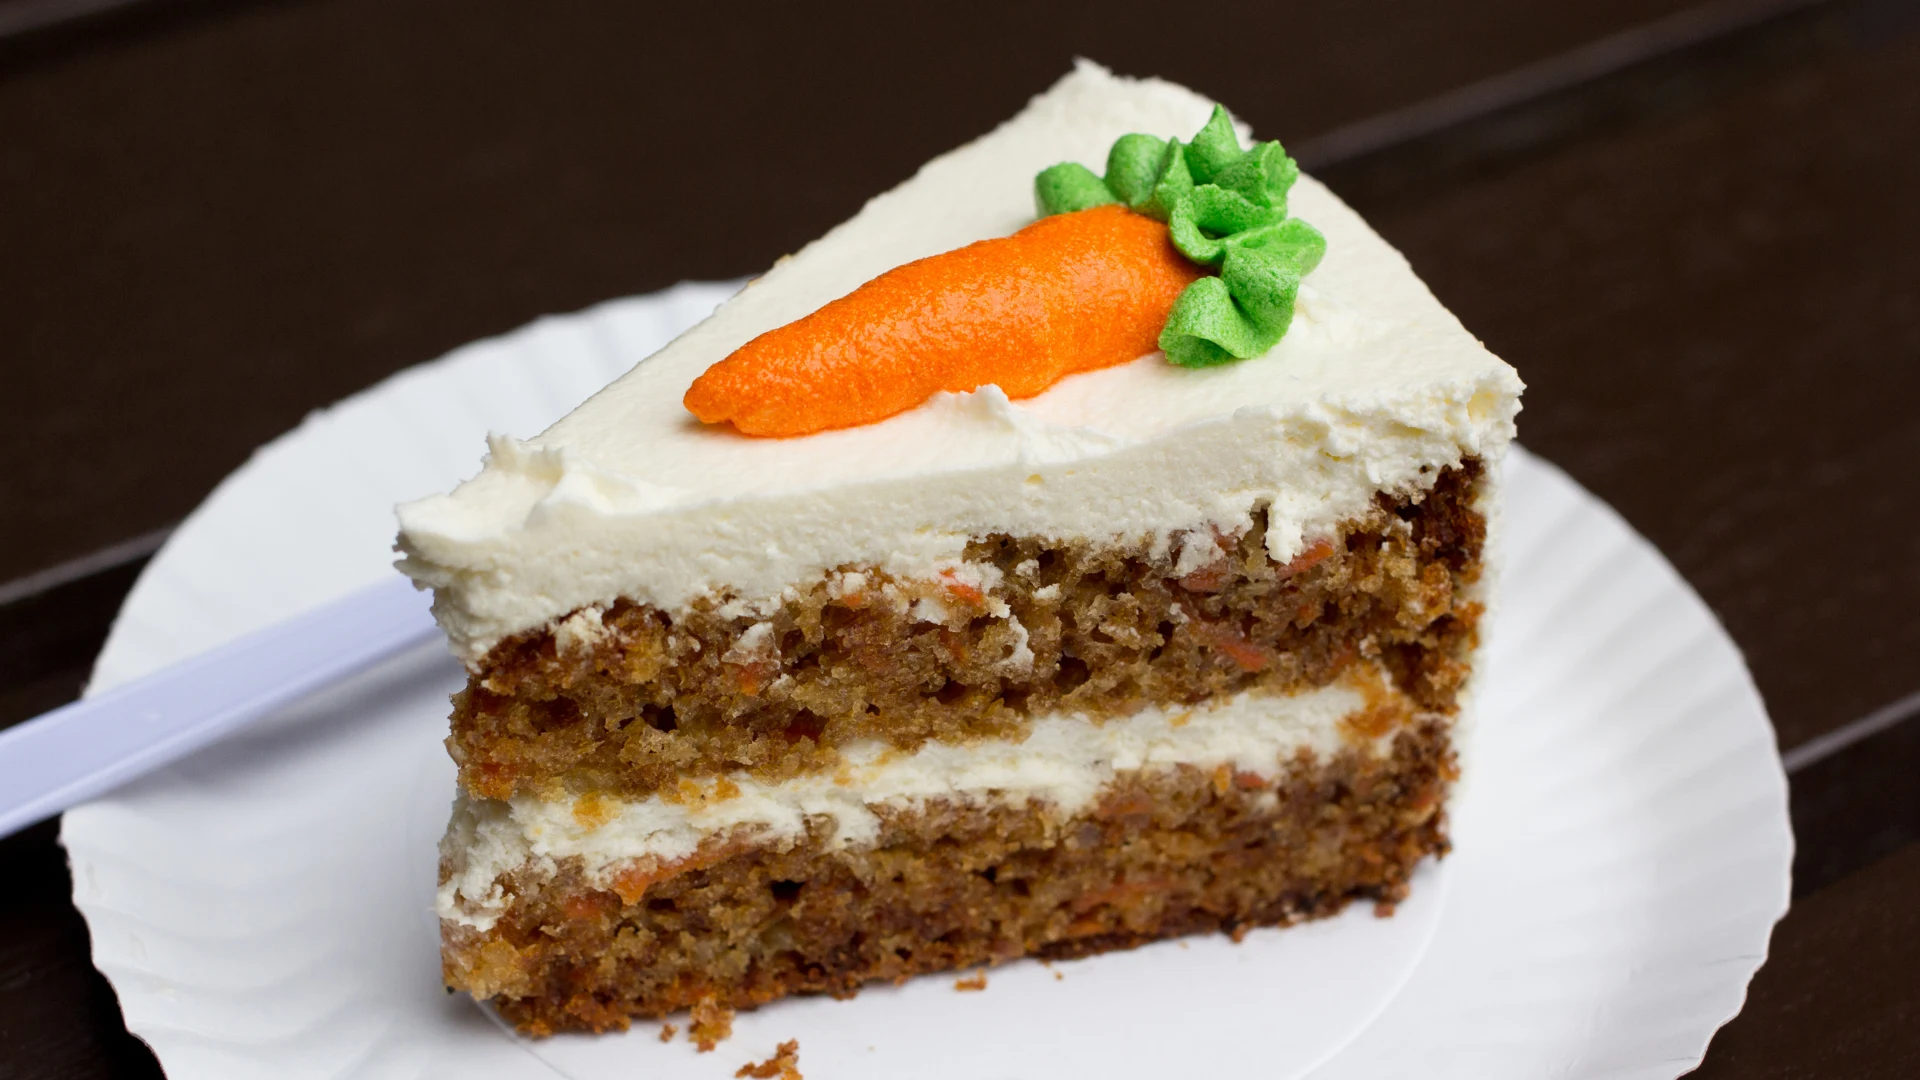 Slice of carrot cake on plate.